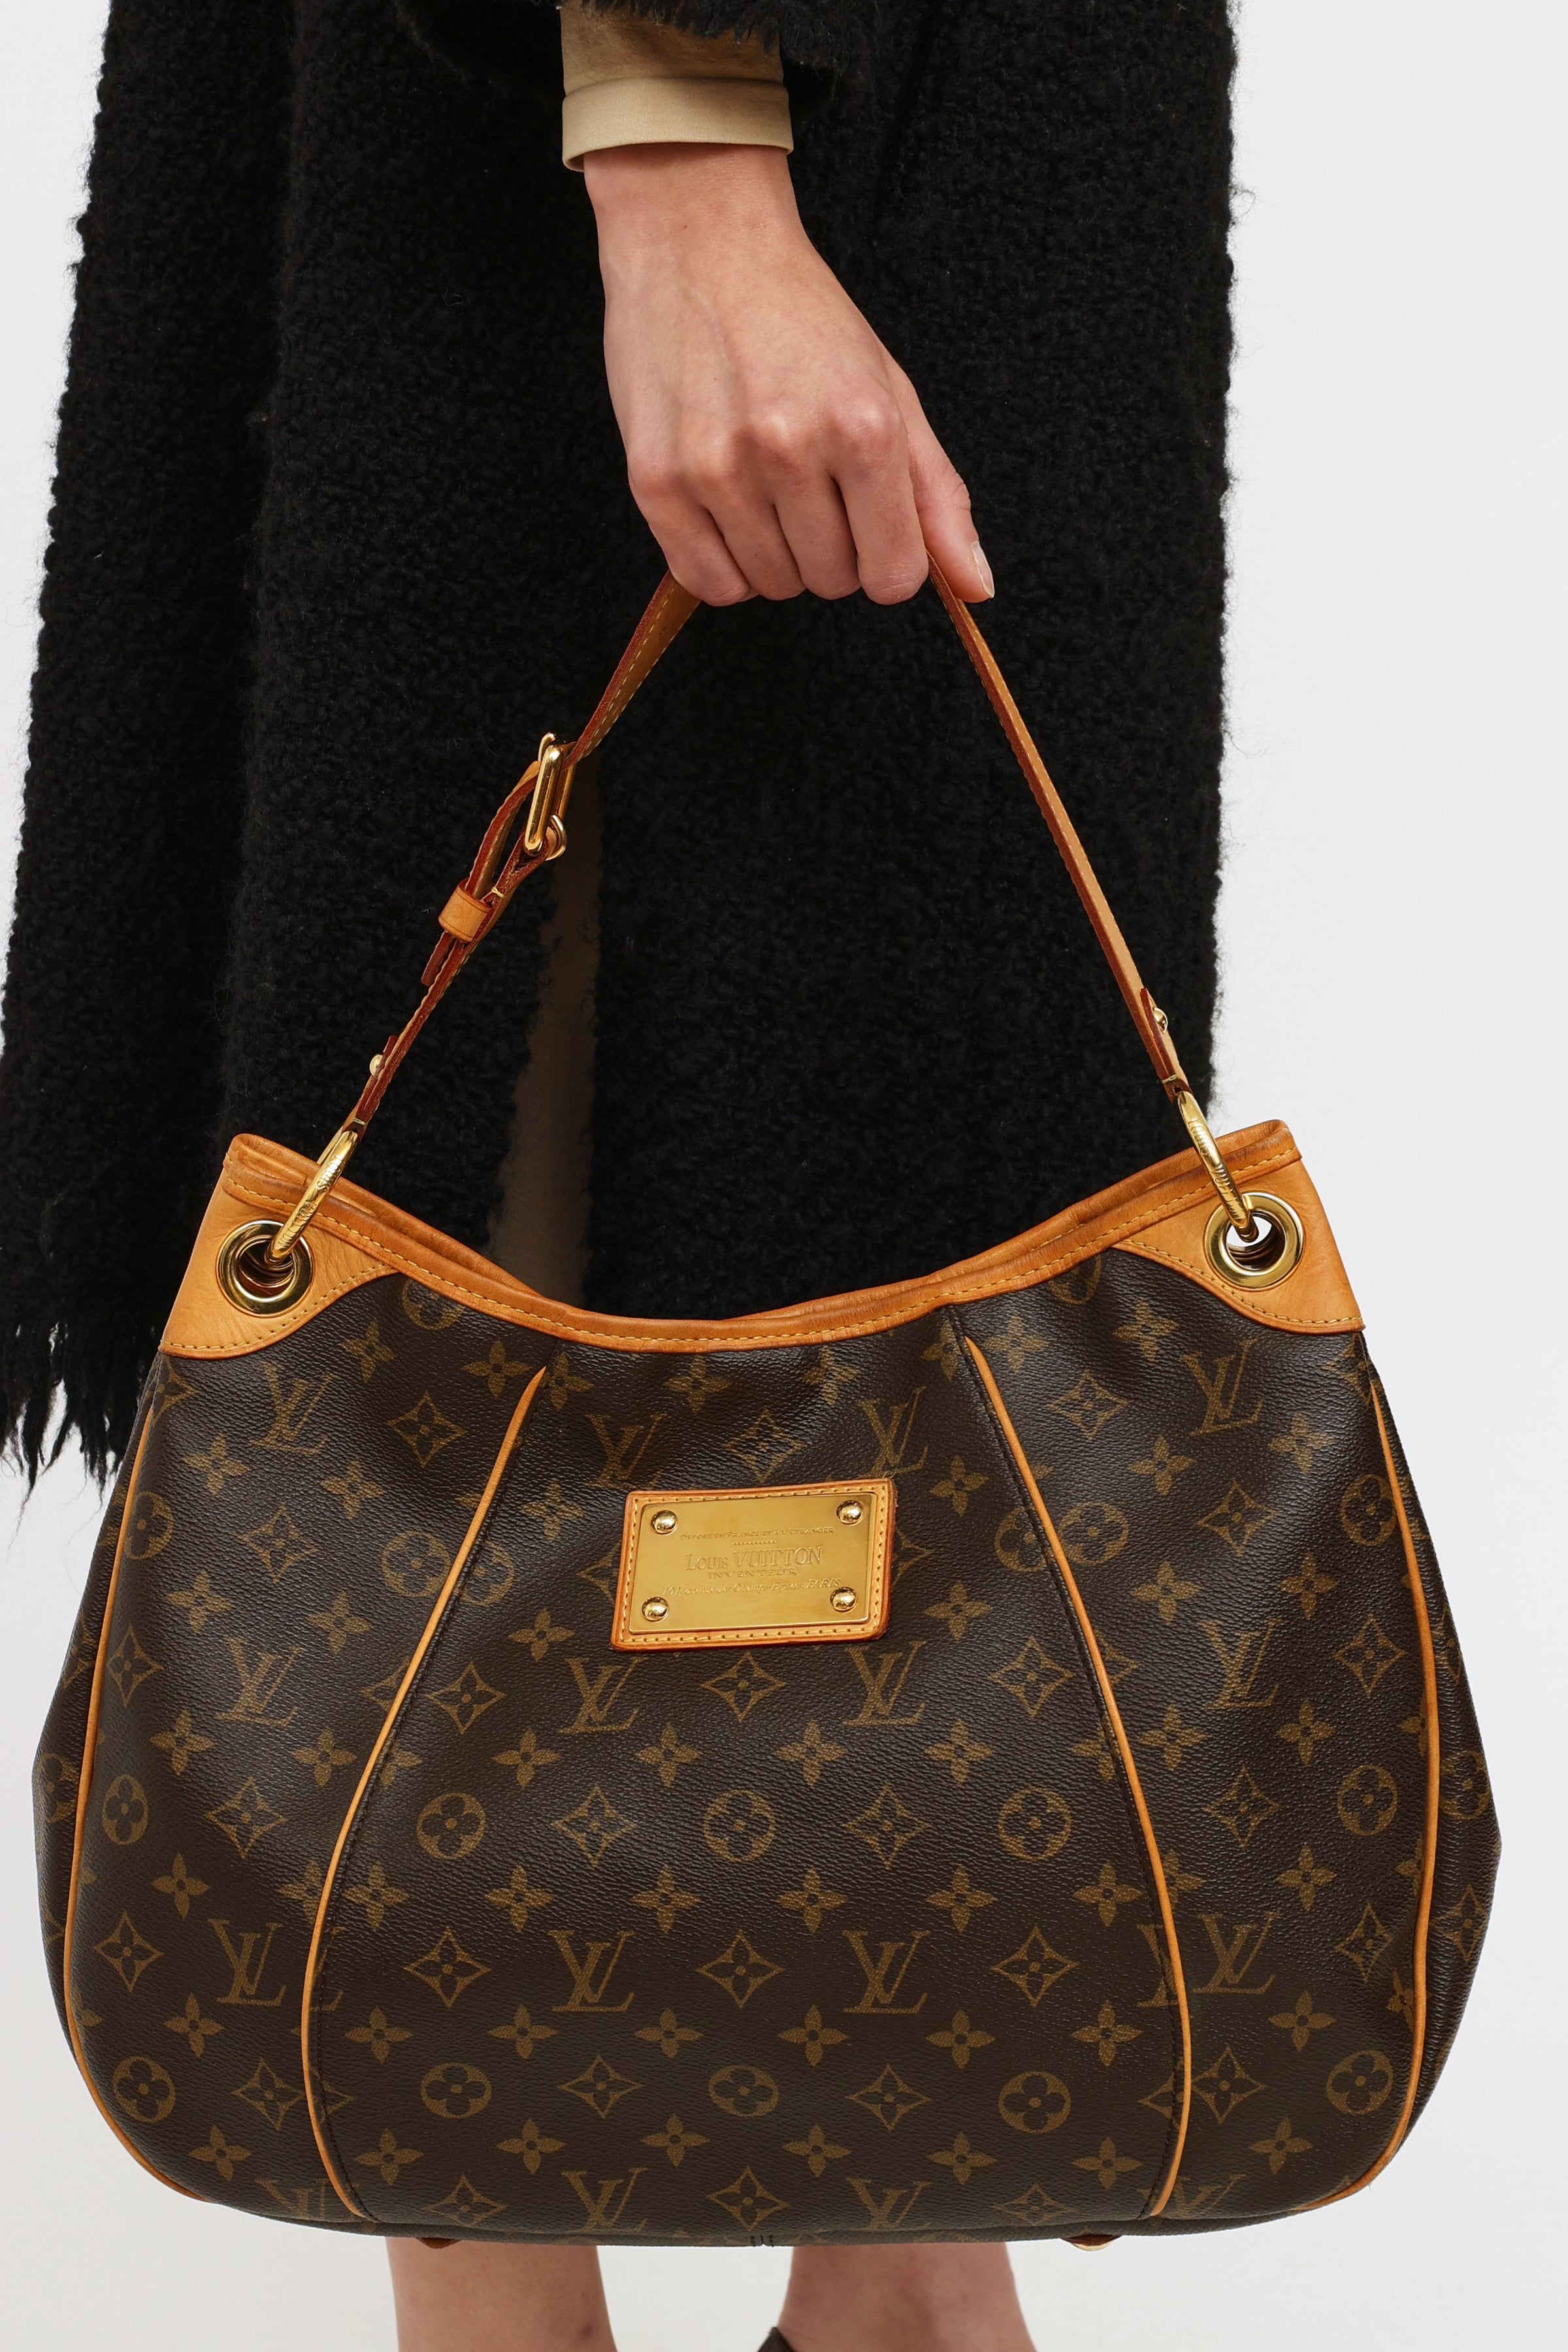 Galliera leather handbag Louis Vuitton Brown in Leather - 32541062